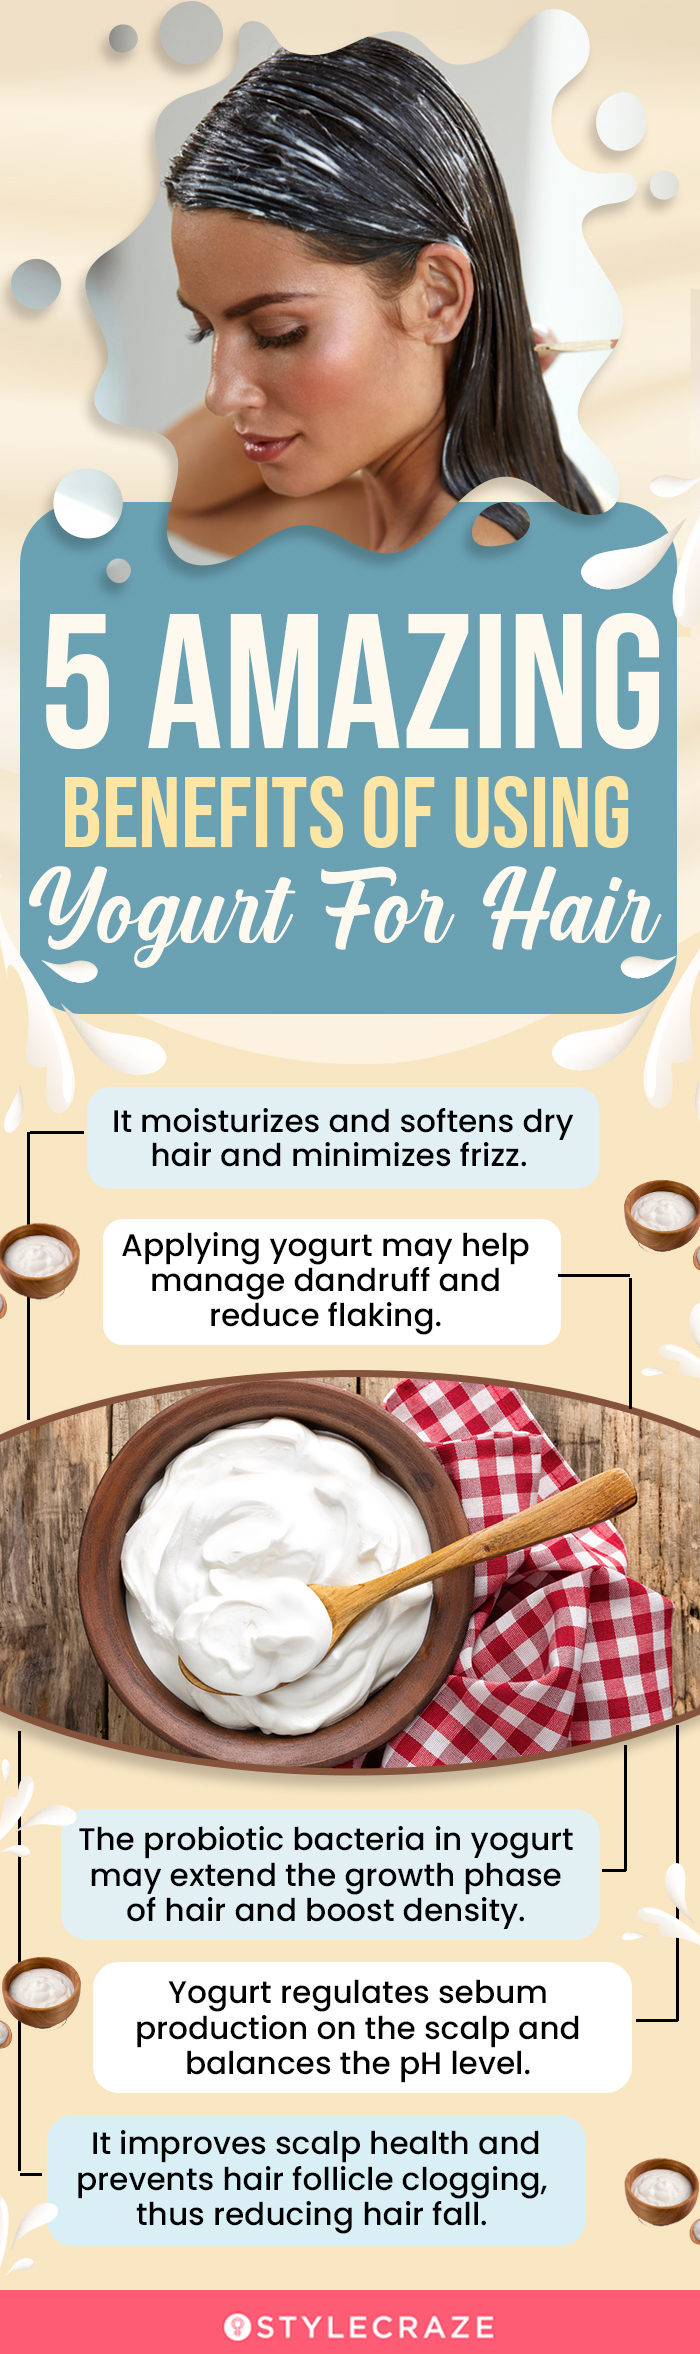 Yogurt For Hair: Masks For Hair Growth & Benefits | StyleCraze